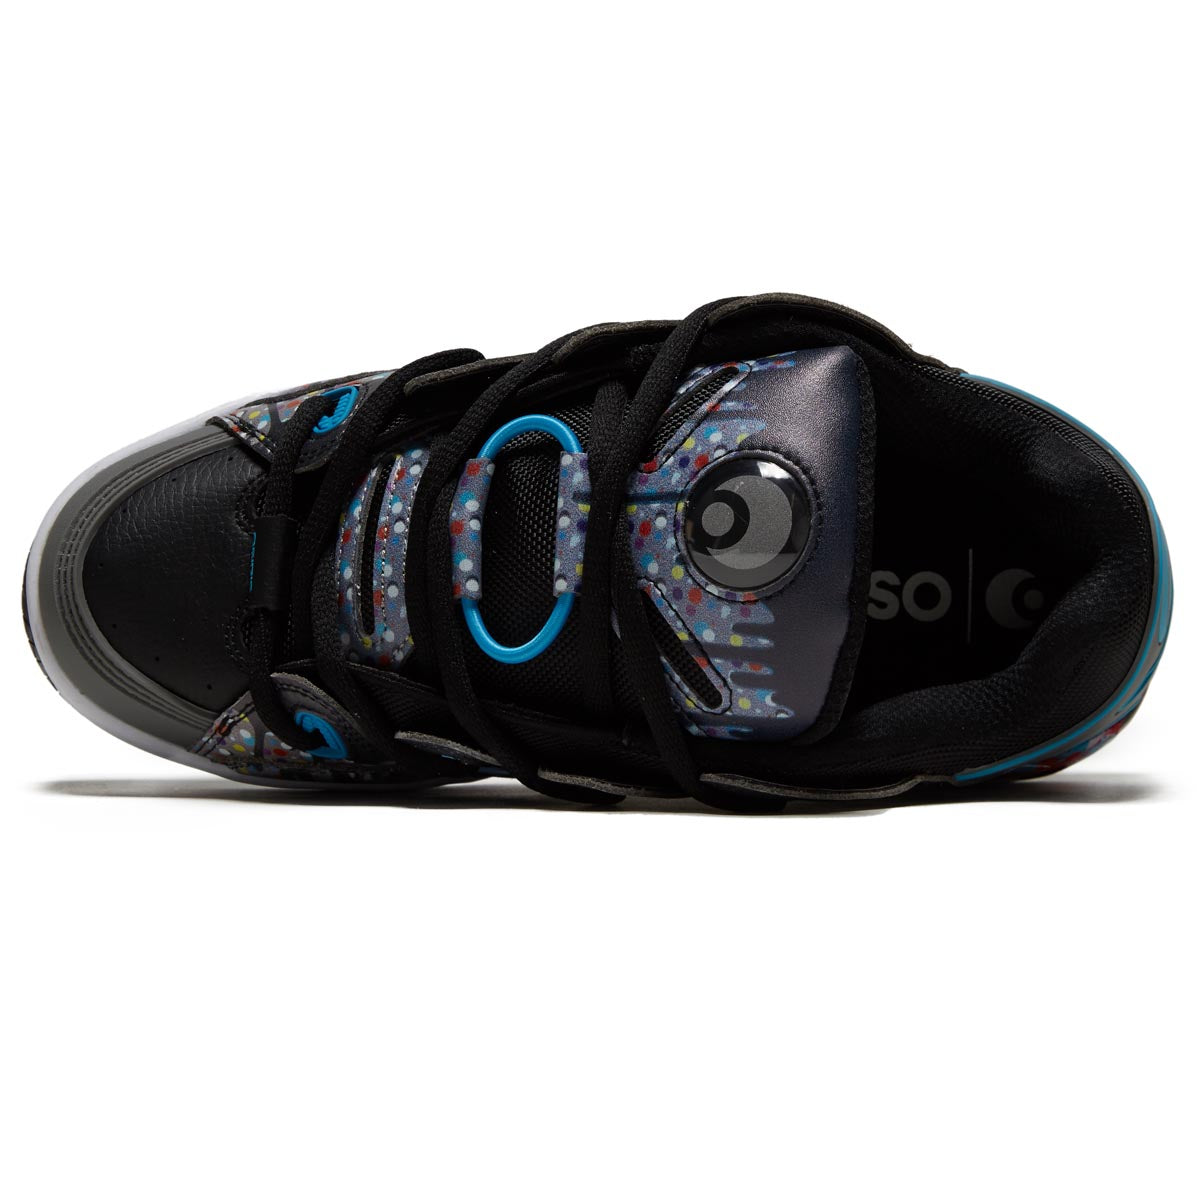 Osiris D3 OG Shoes - Black/Grey/Drips image 3